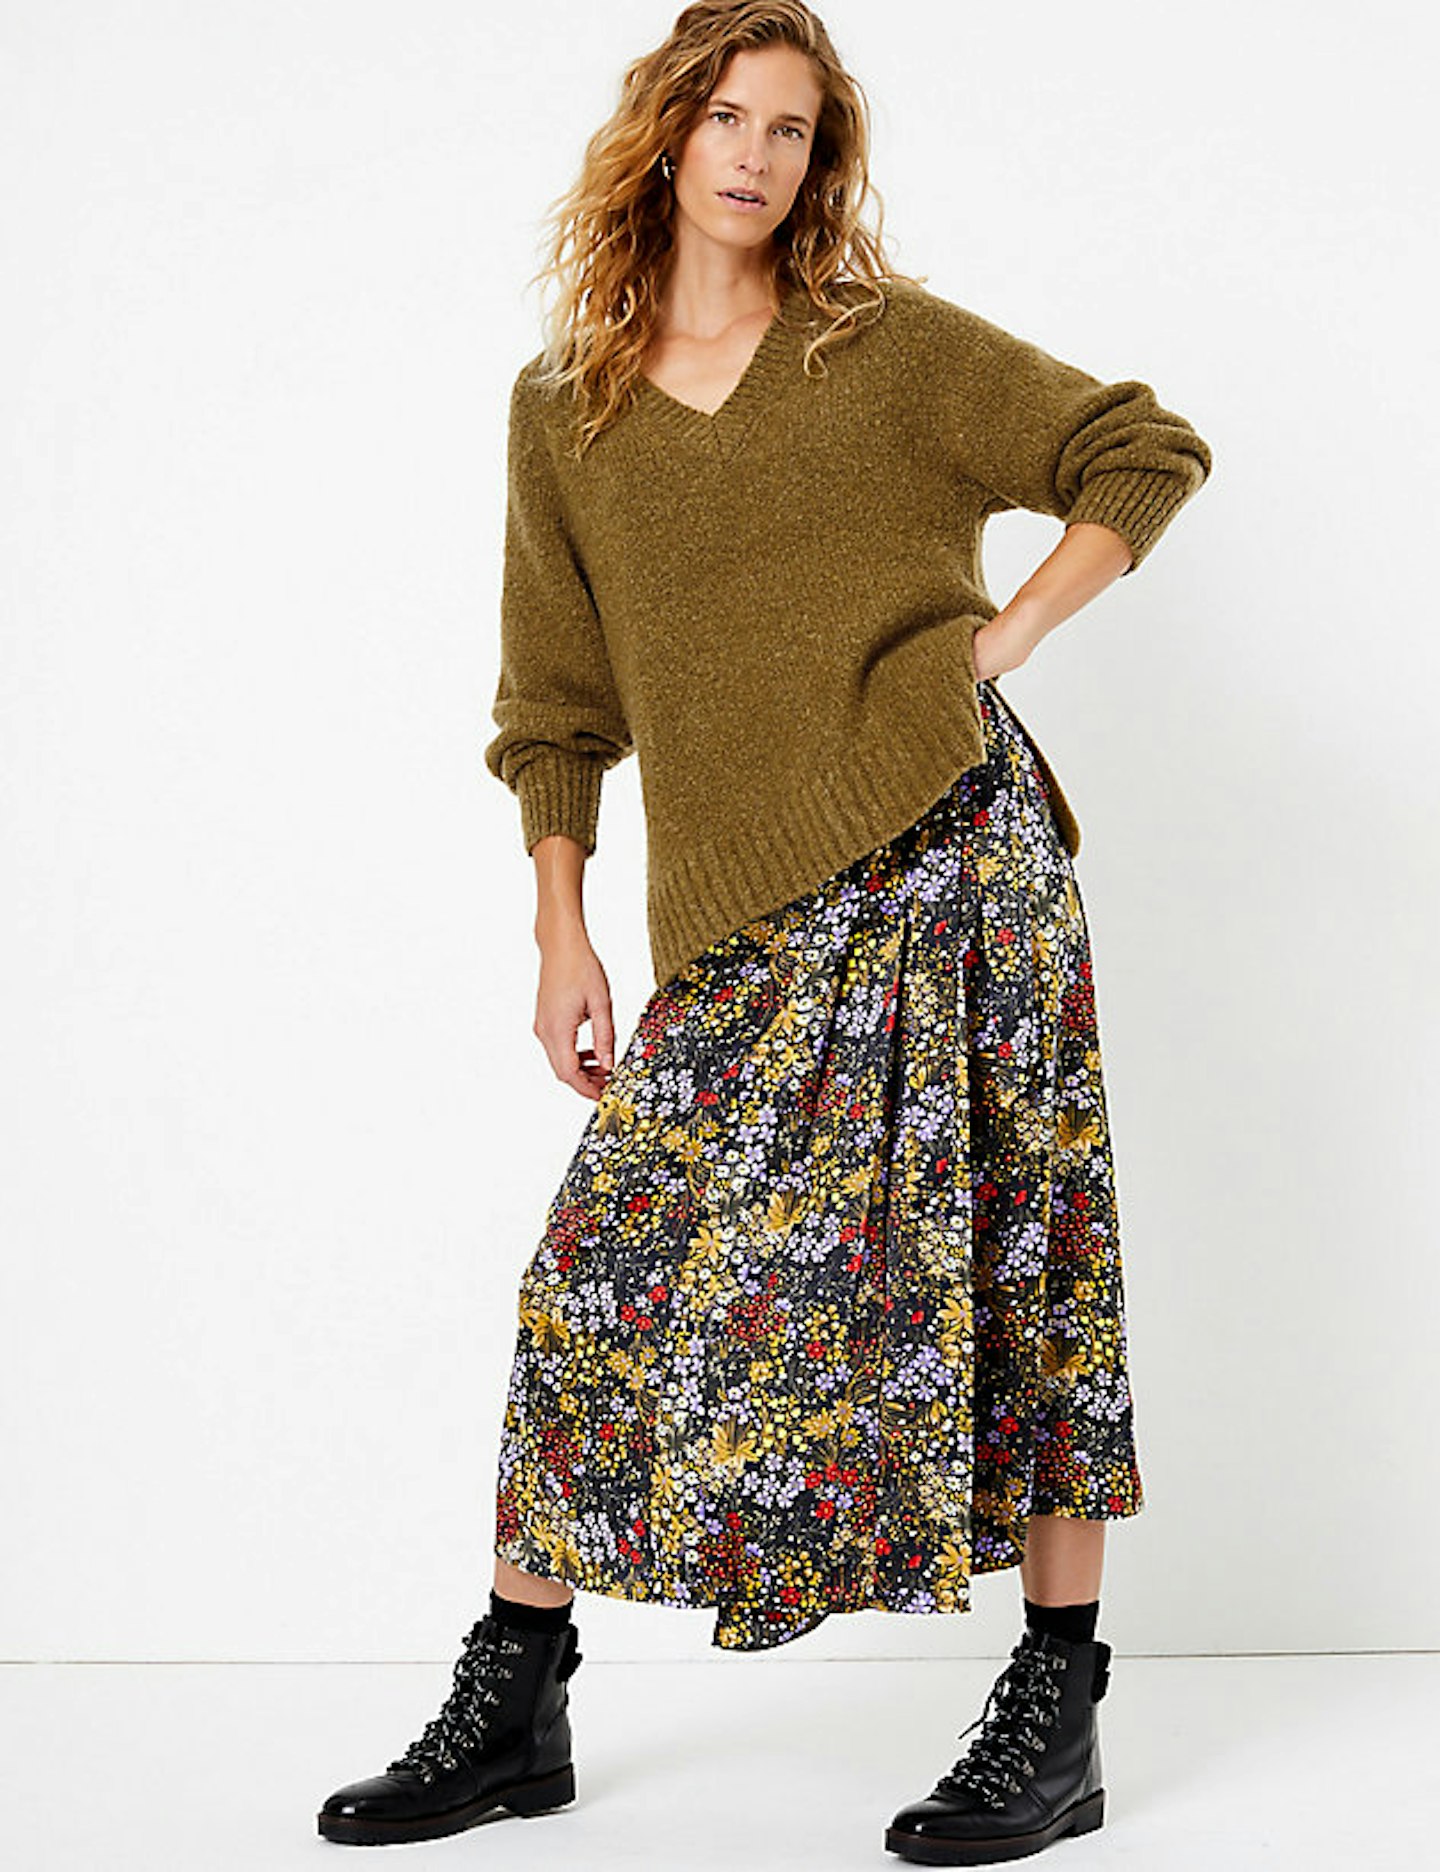 Satin Floral Skirt, £49.50